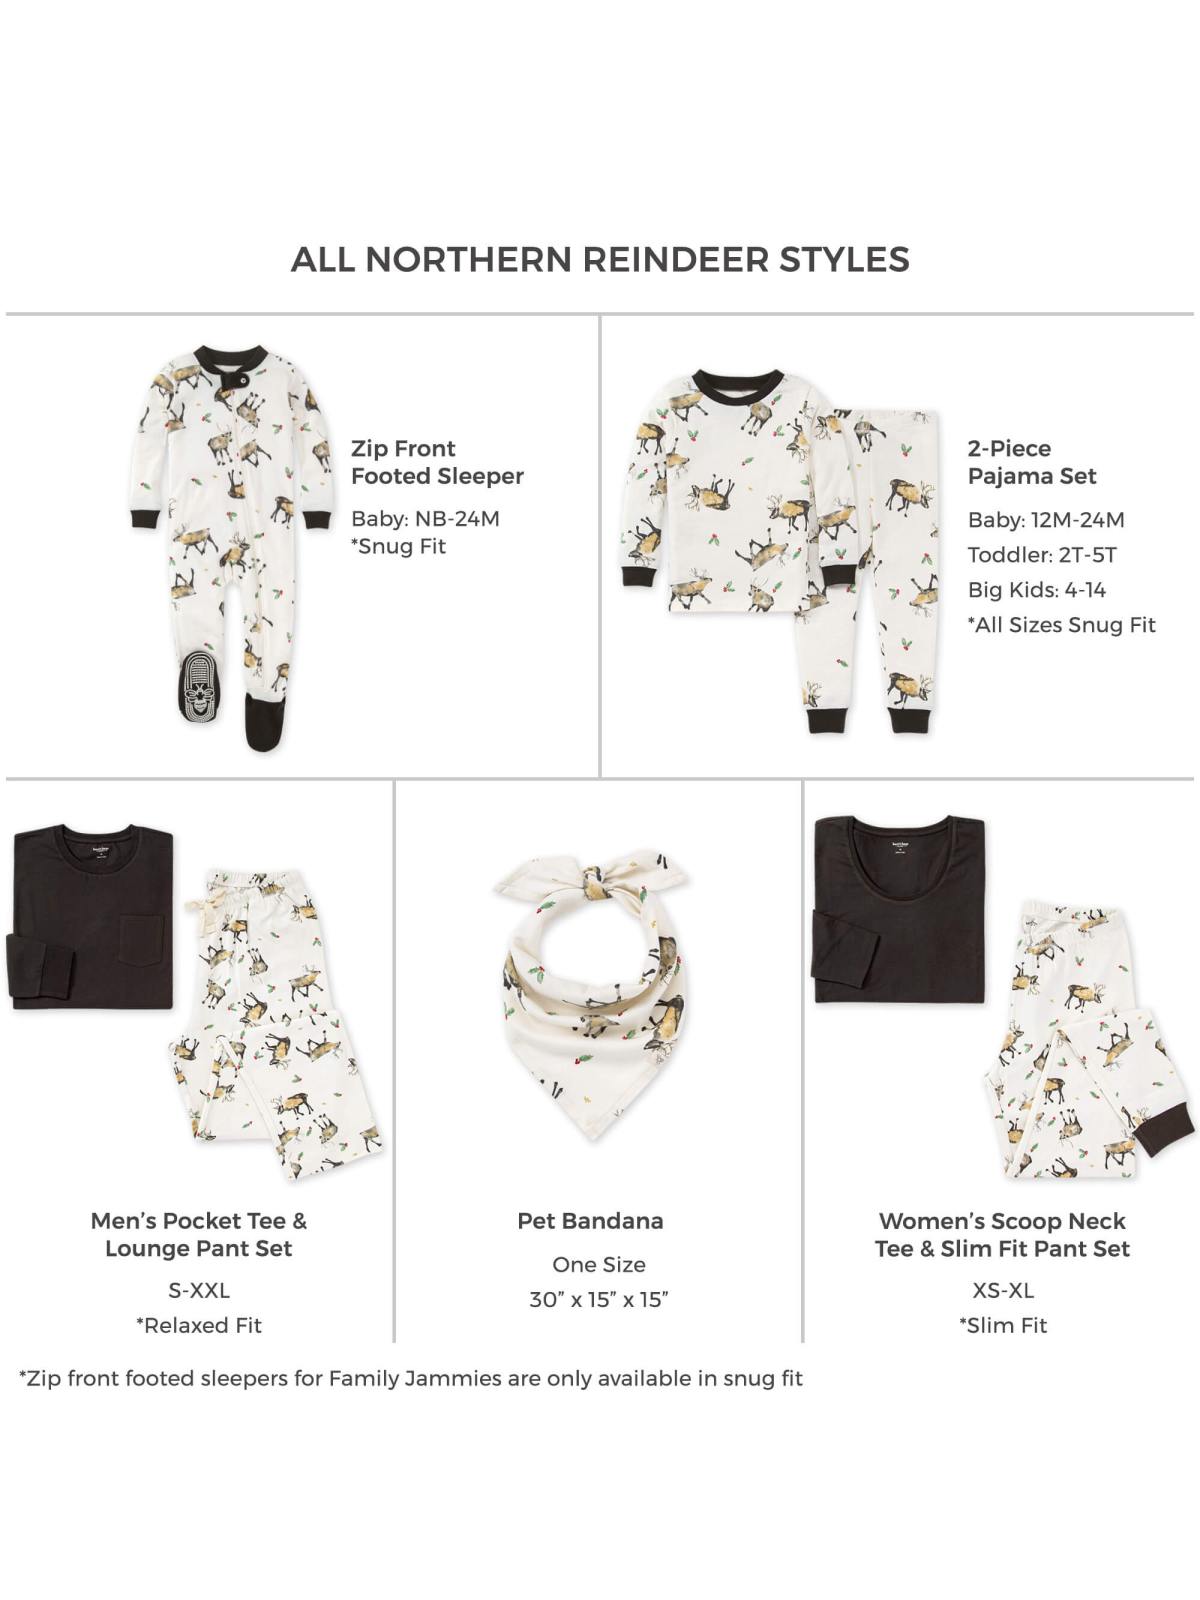 Adult Women's Pajama Set, Northern Reindeer